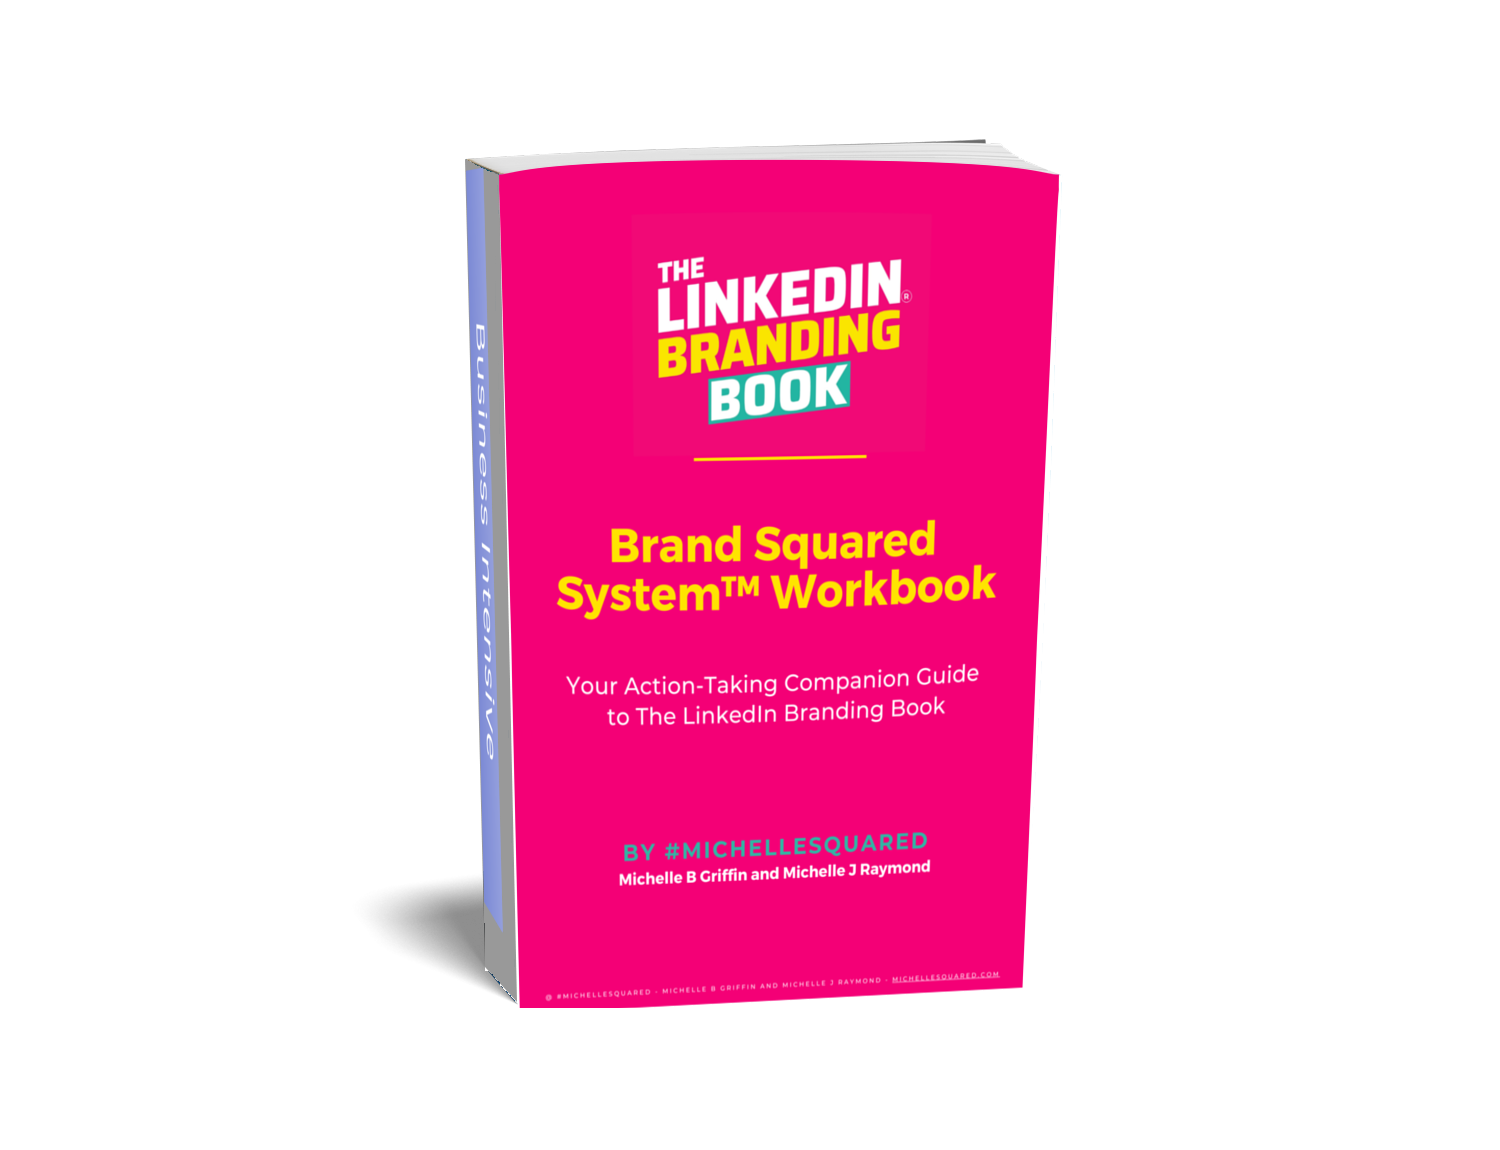 Brand Squared System™ Workbook